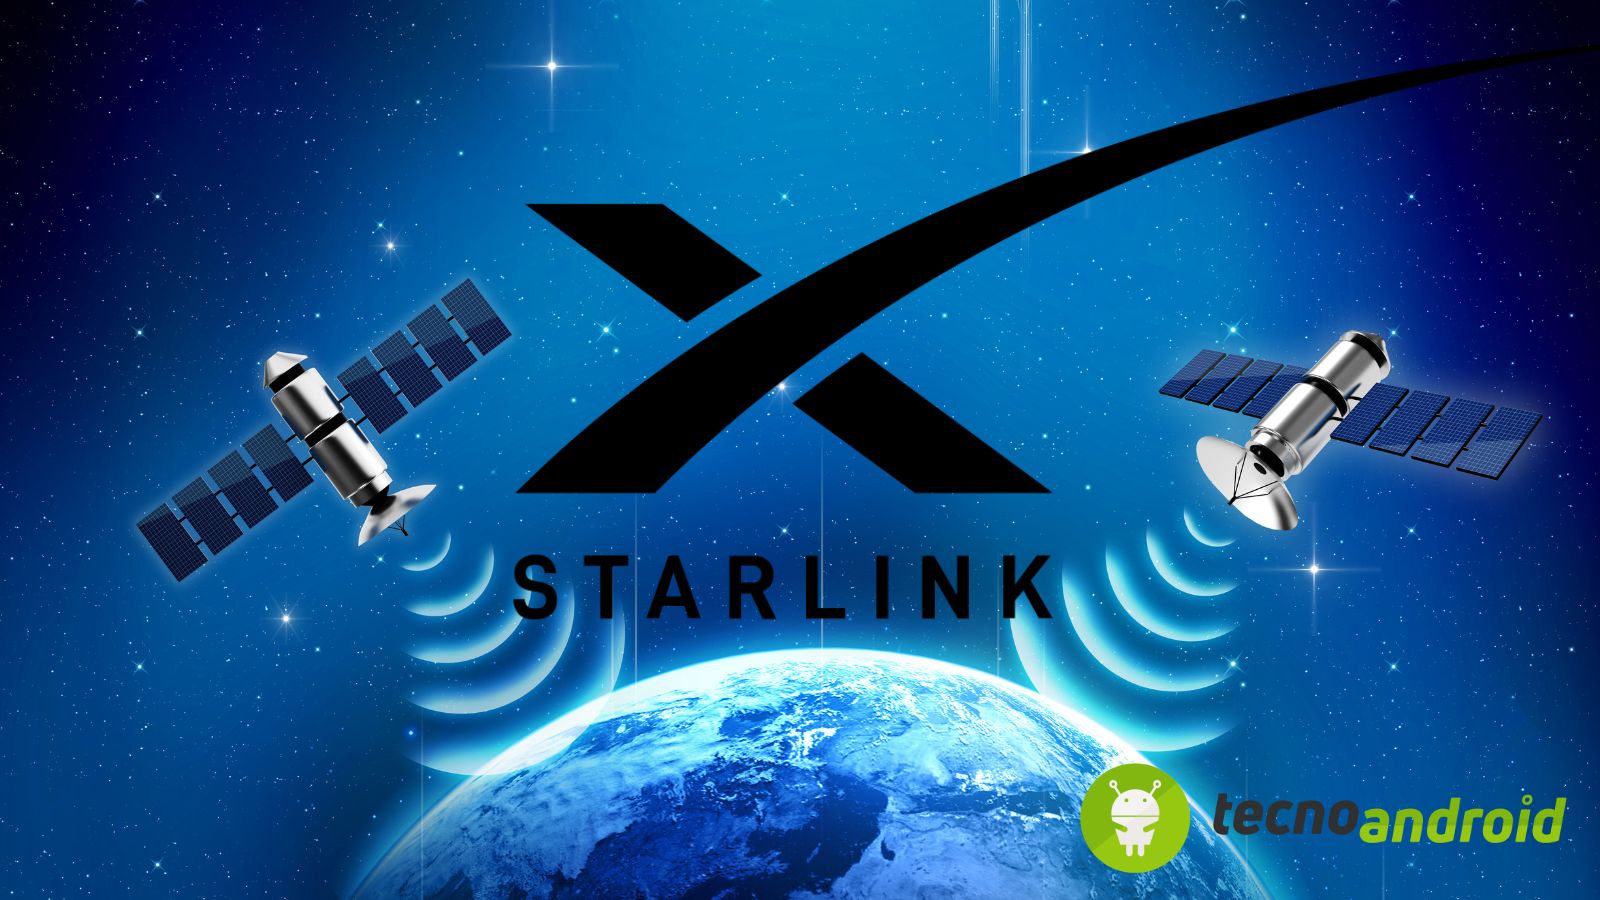 Starlink: arriva l’interessante offerta di Elon Musk per l'Italia